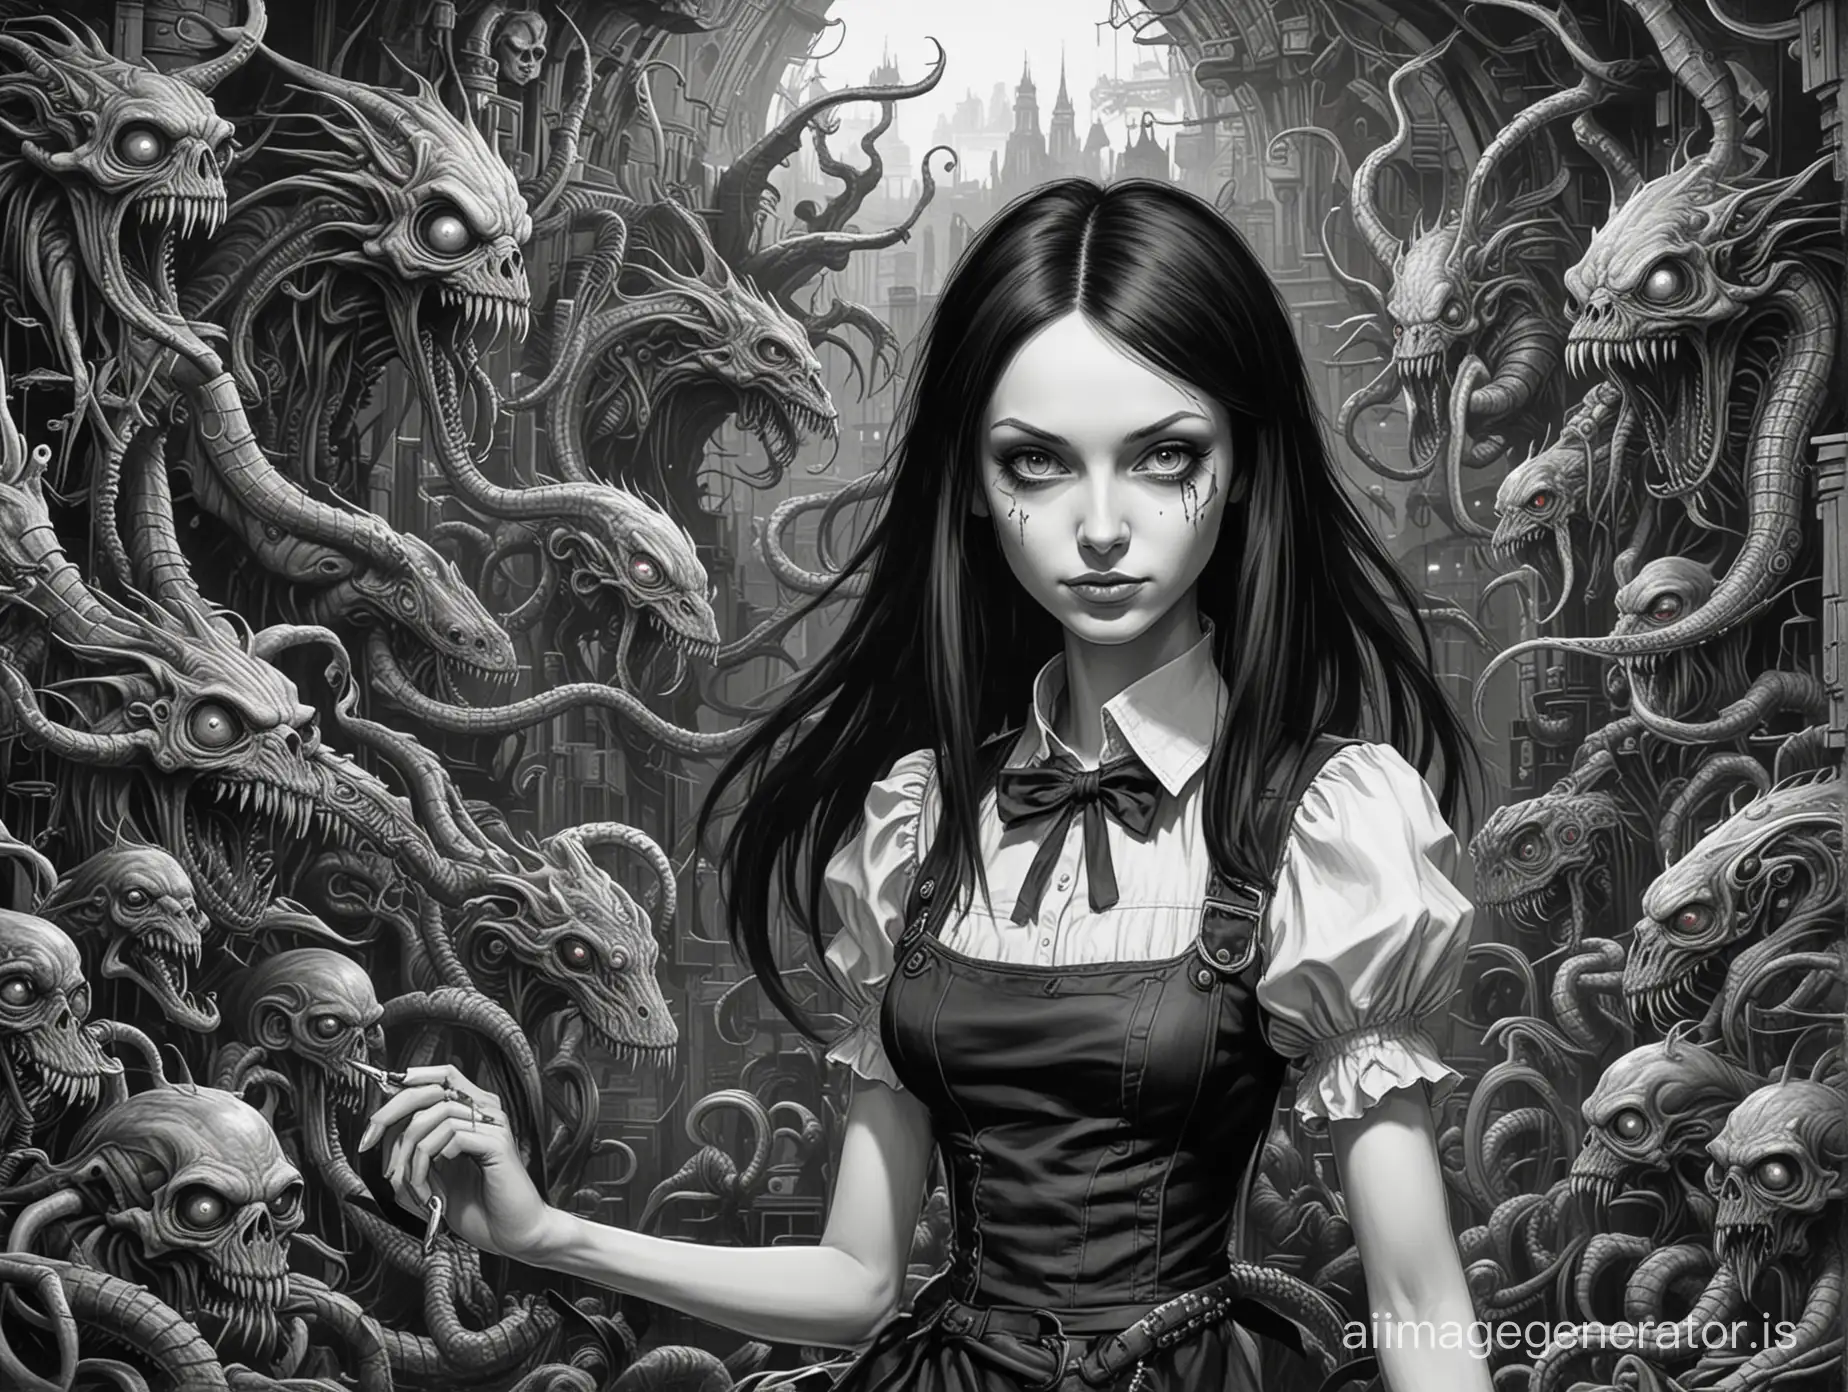 Cyberpunk-Alice-in-Wonderland-with-Lovecraftian-Horror-Elements